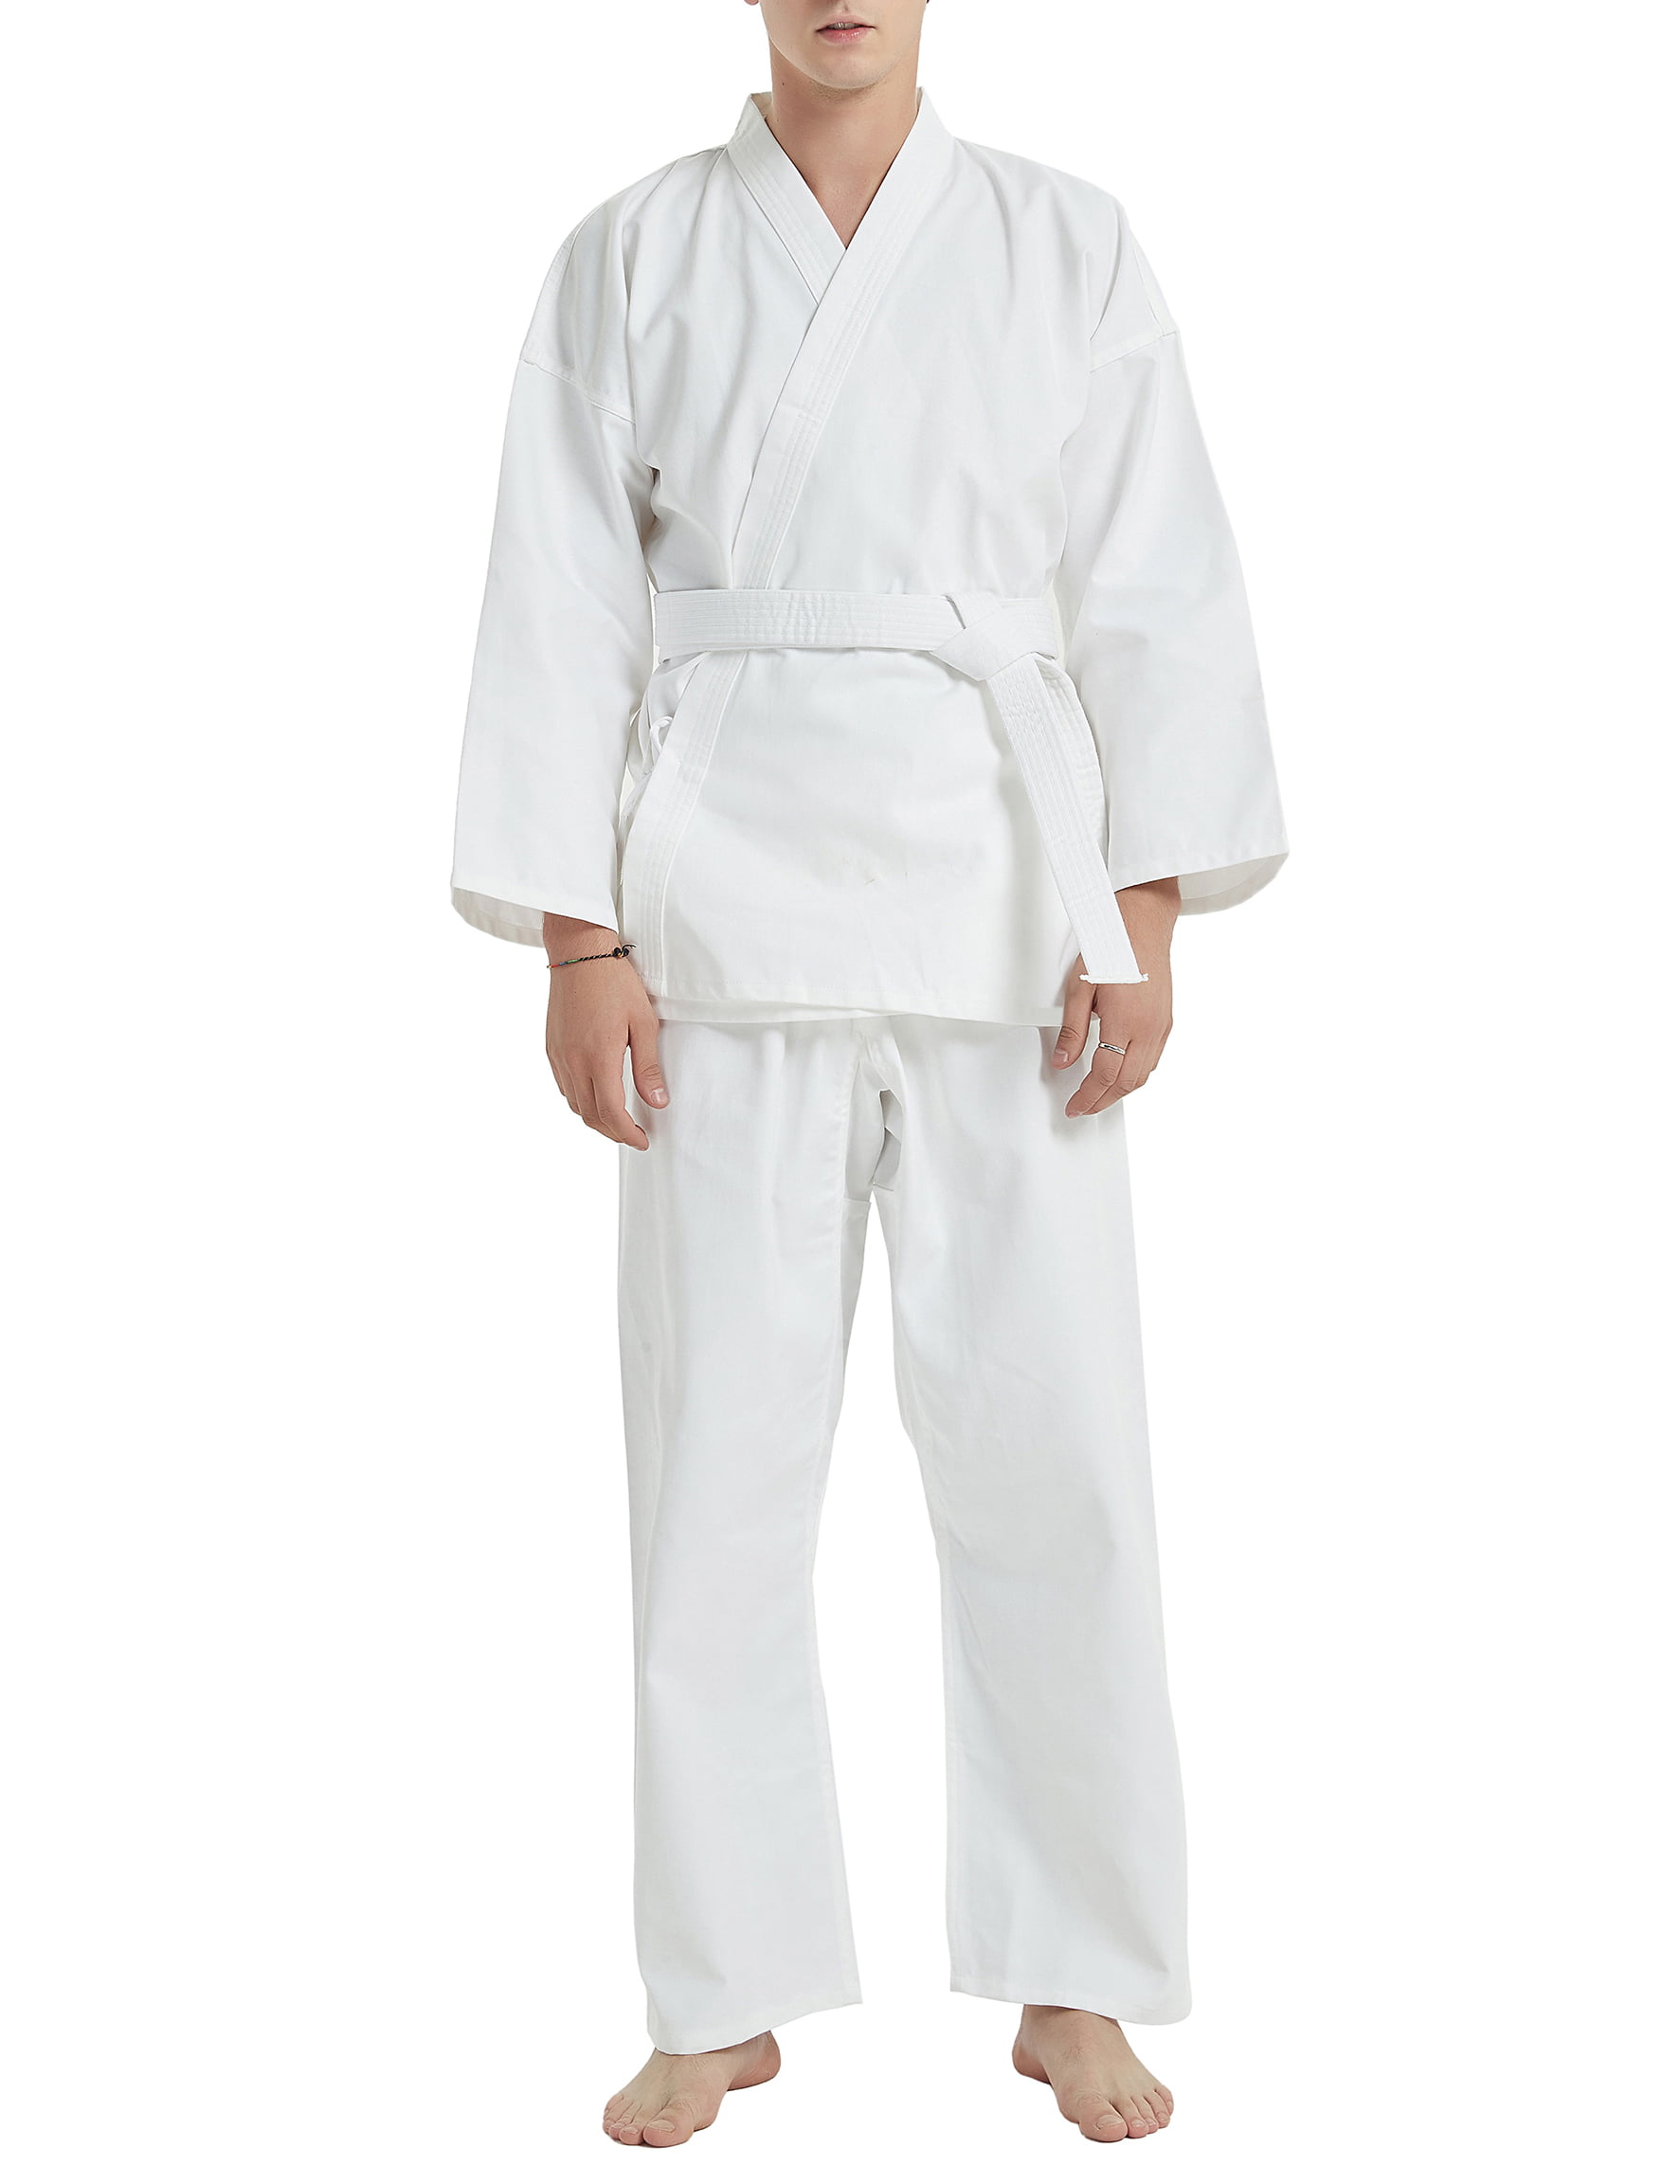 Children's Taekwondo Uniform Boy White Art Costume Unisex Girl Karate LF 